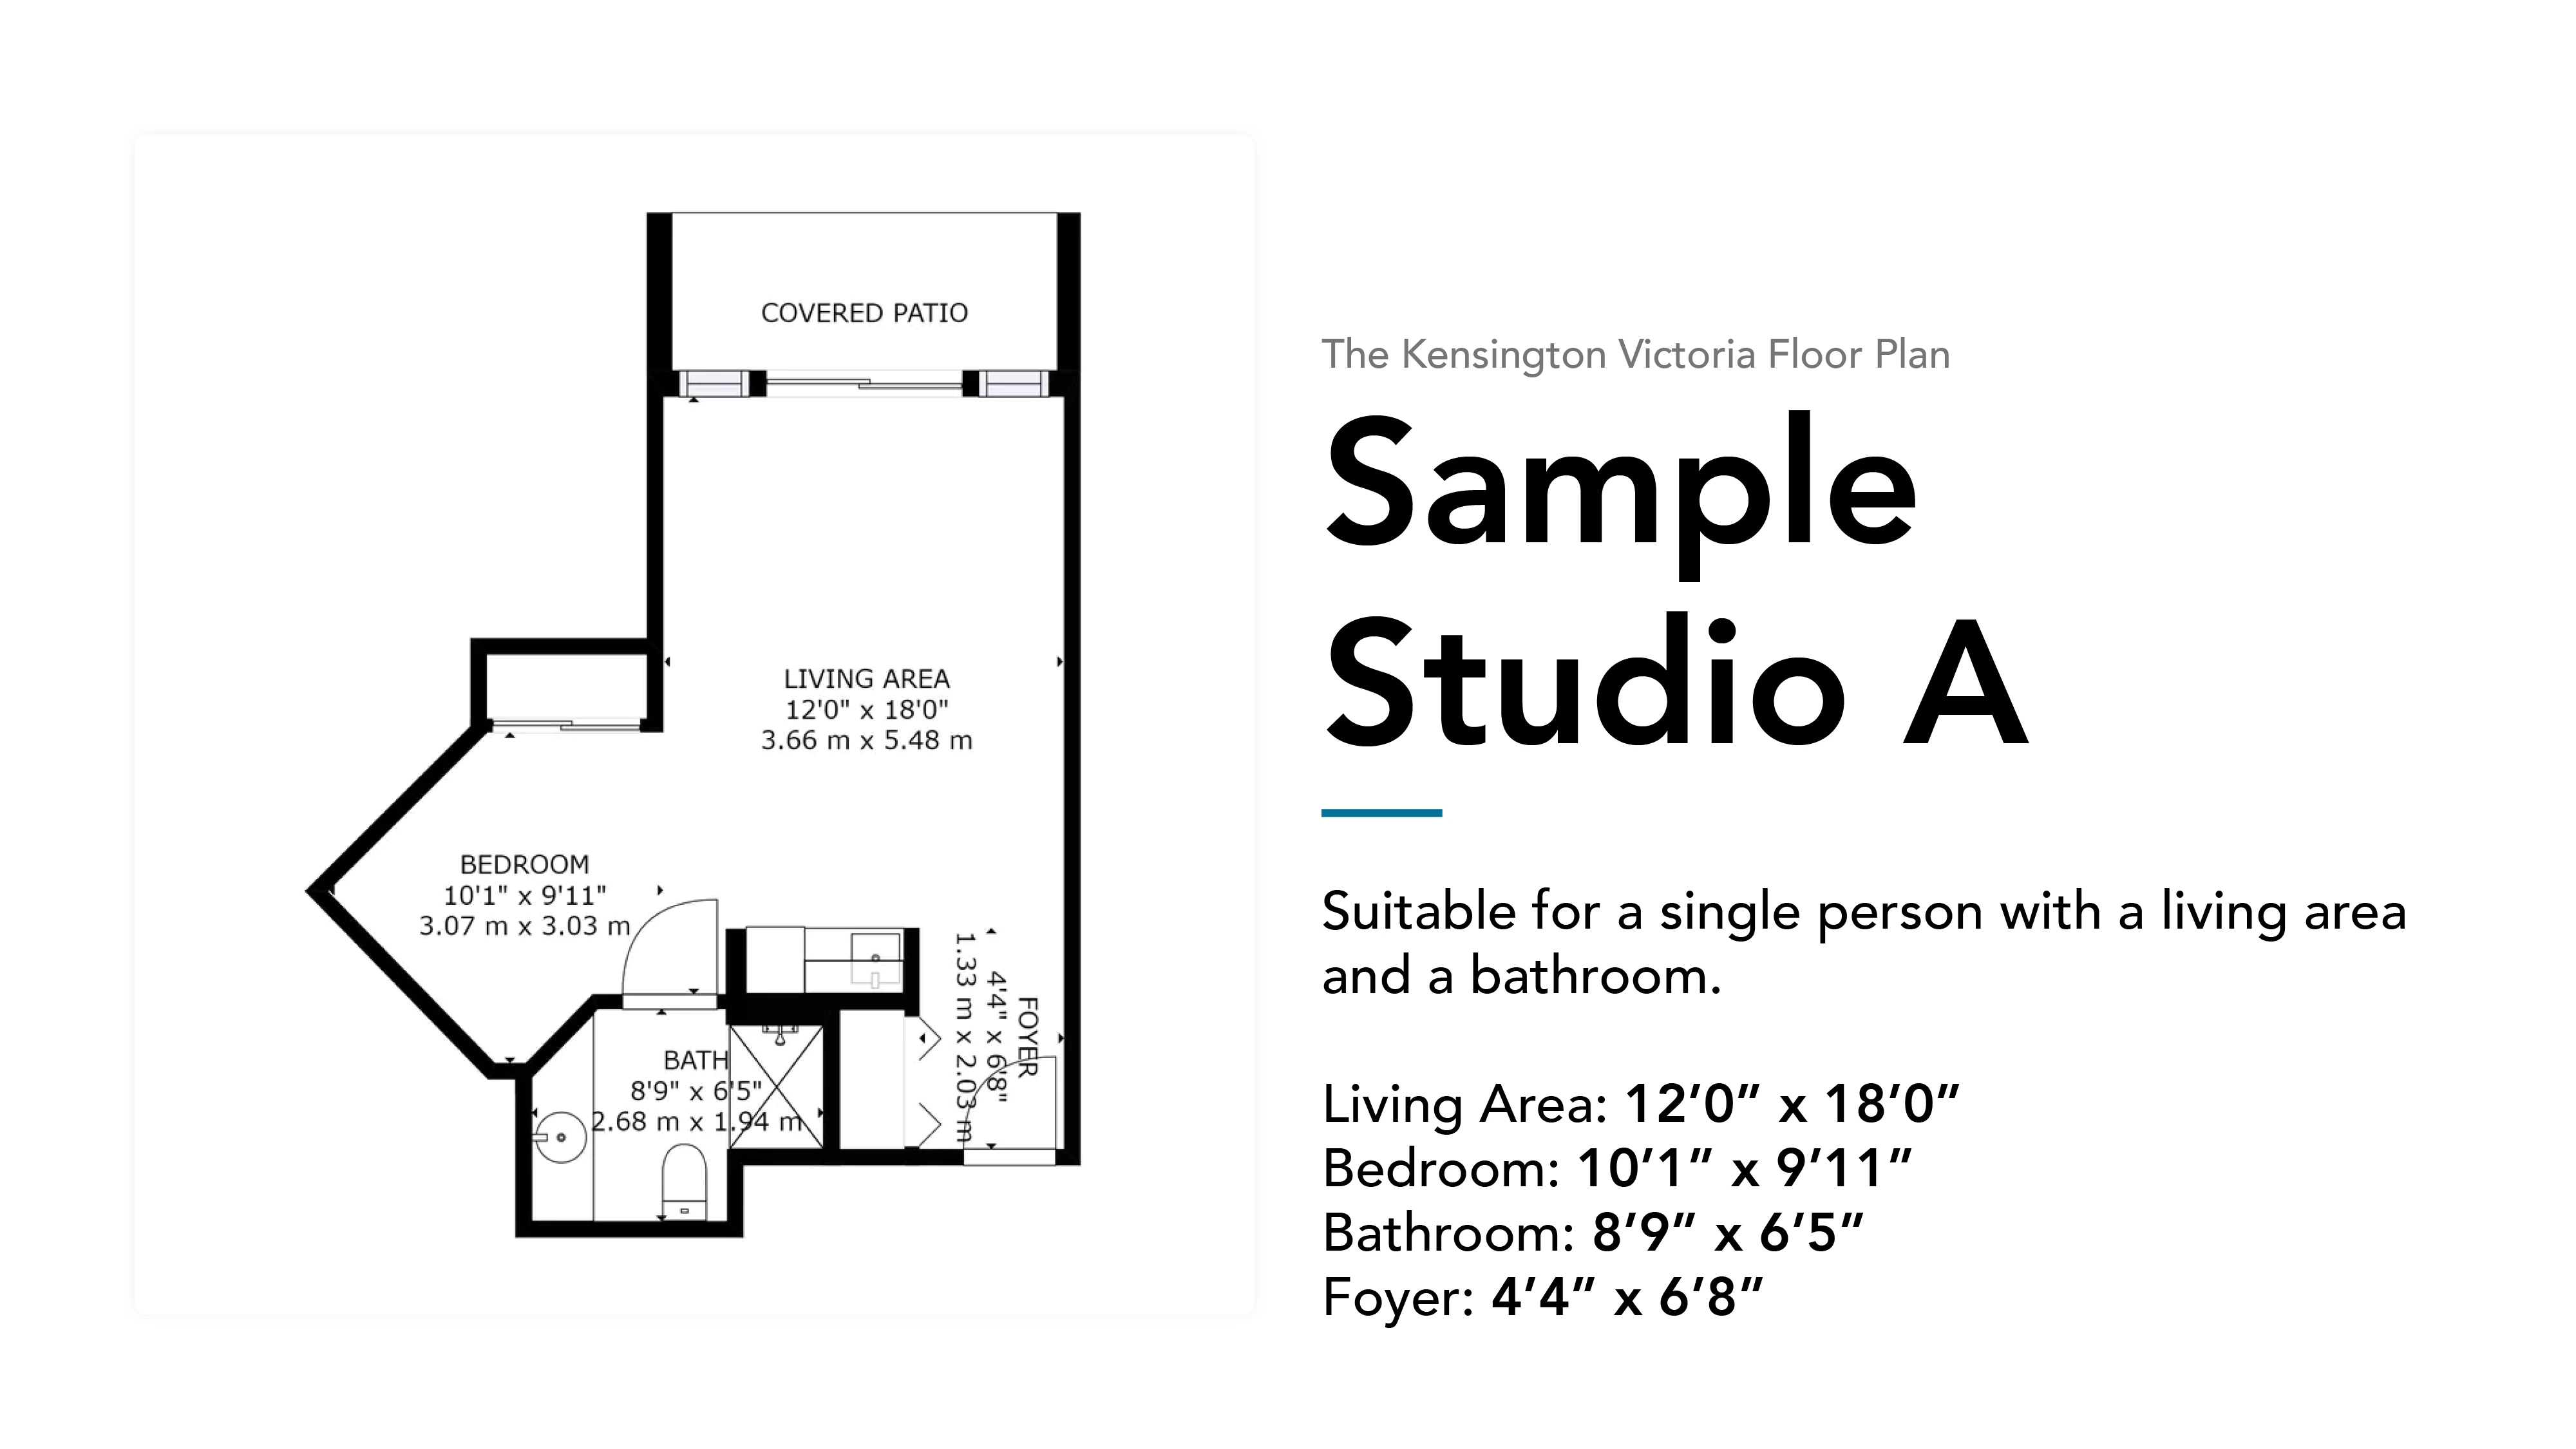 Kensington Victoria sample studio a floor plan